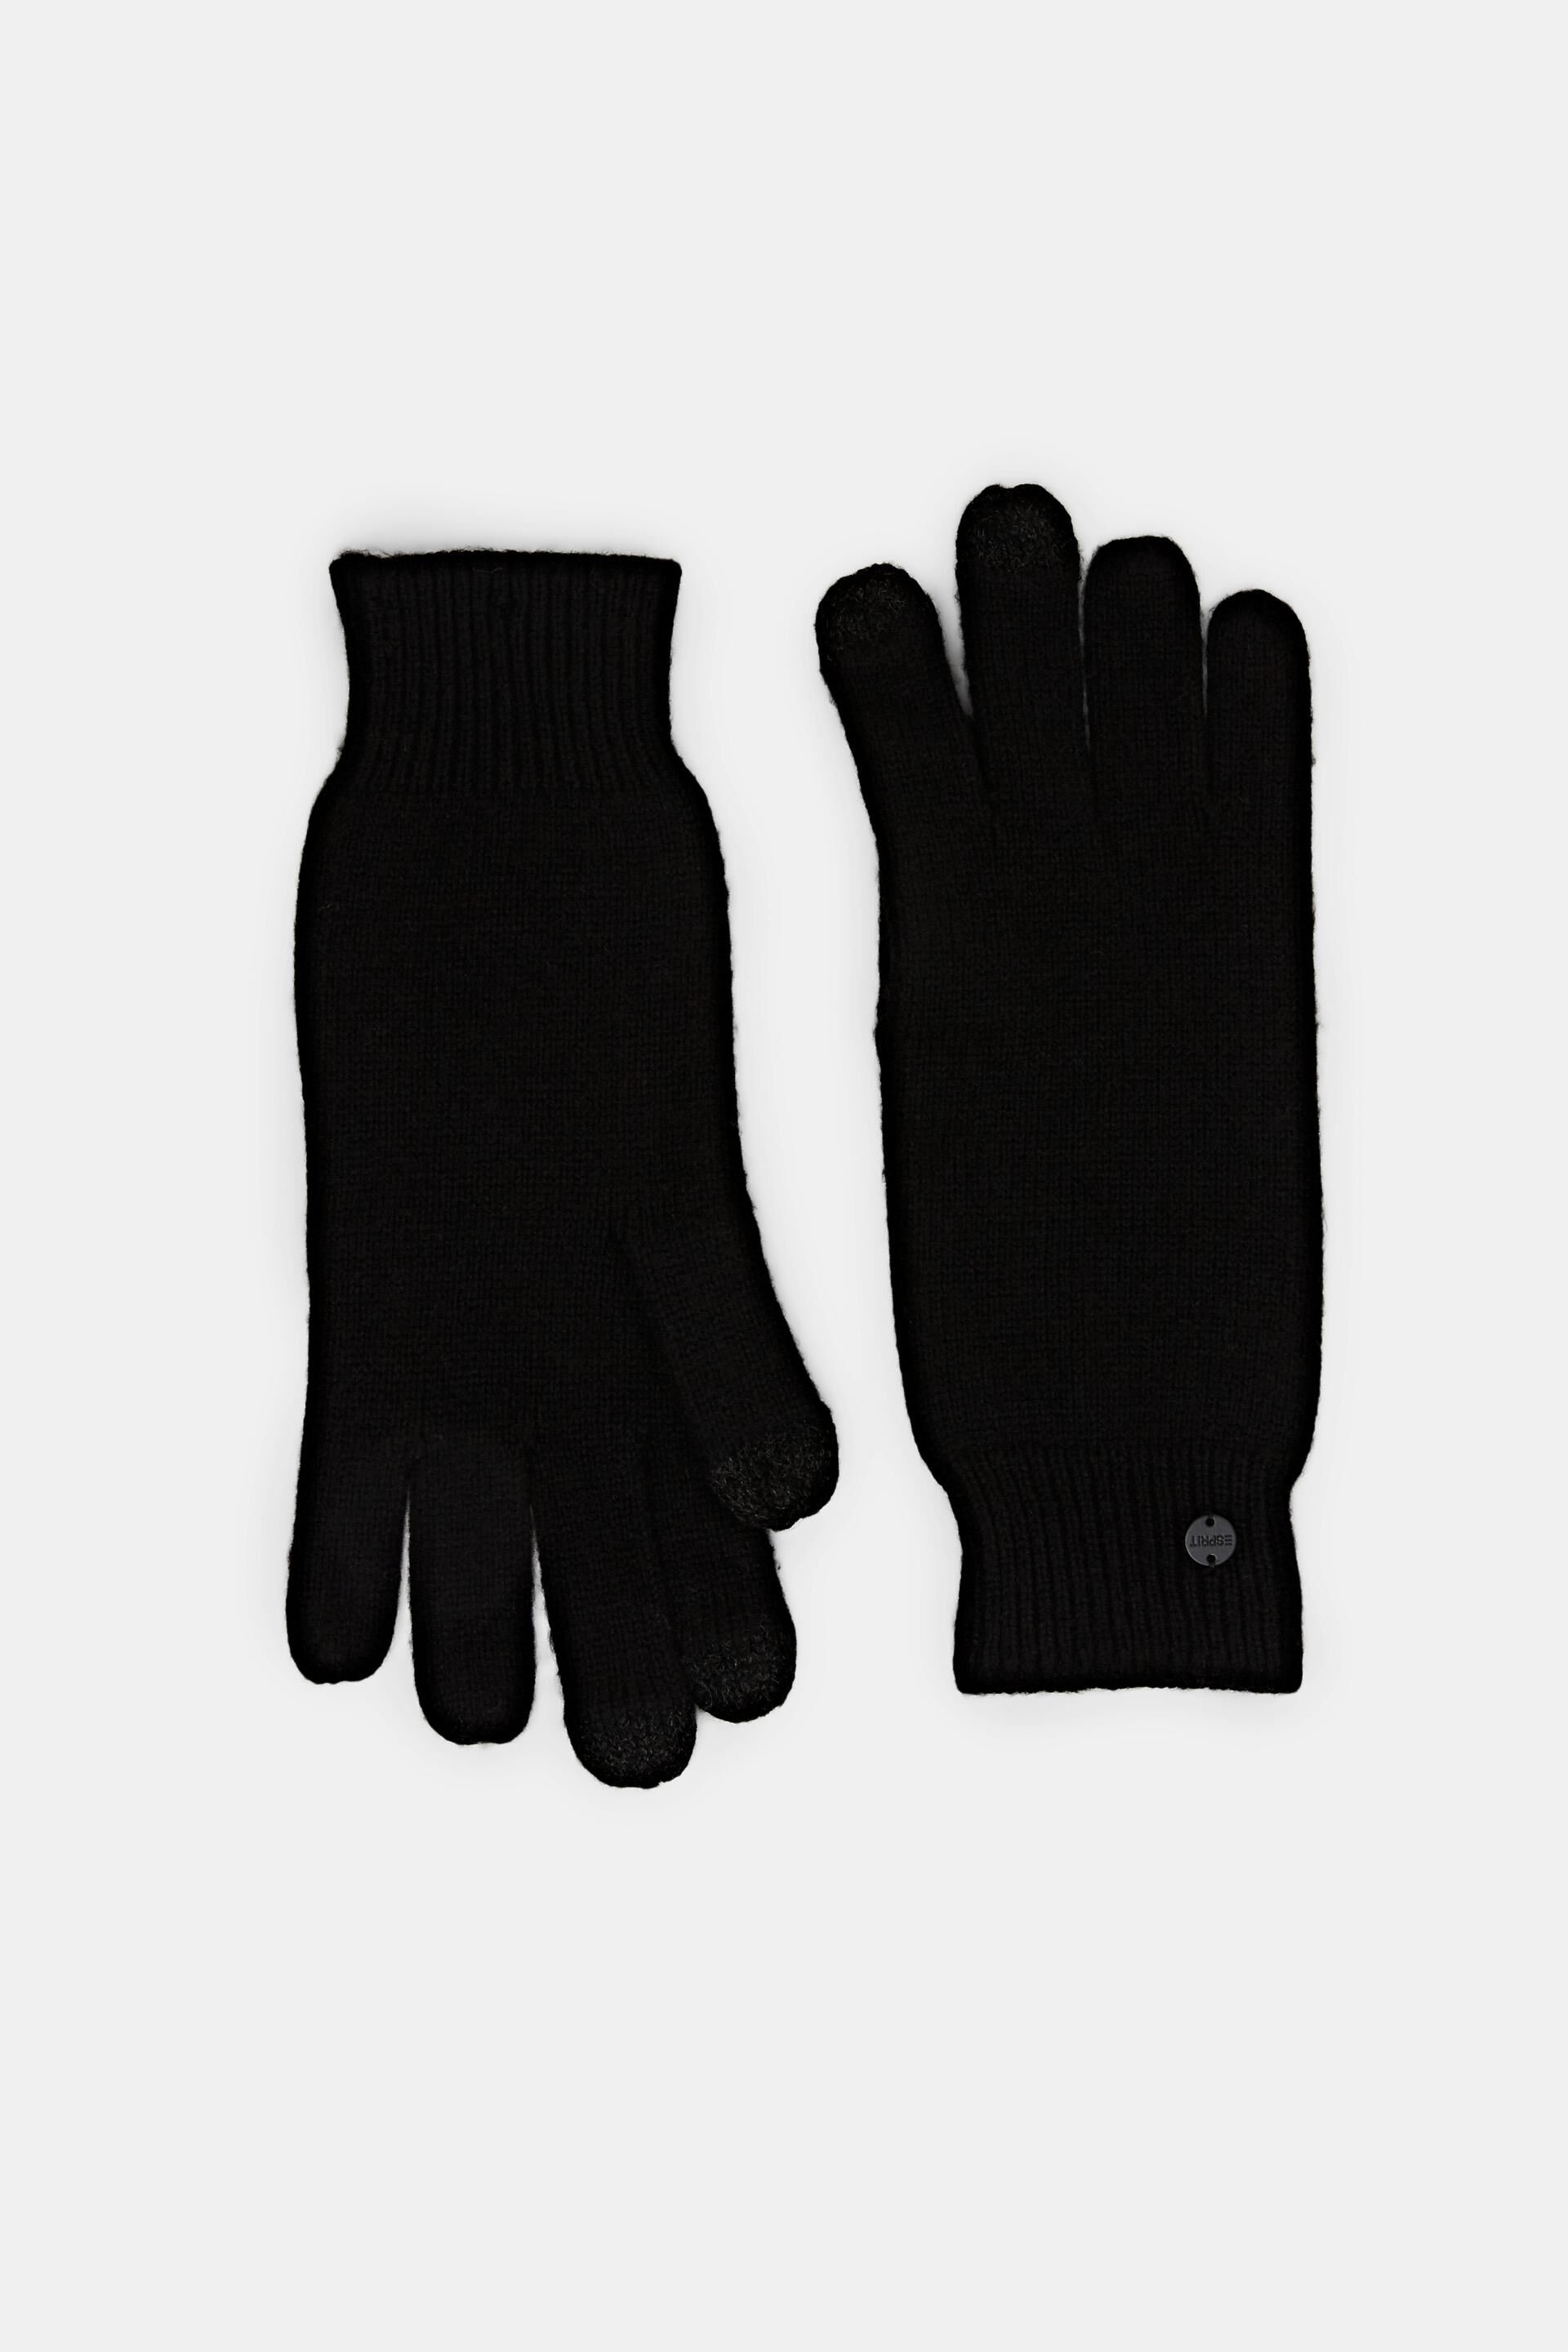 Esprit Online Store Gloves non-leather